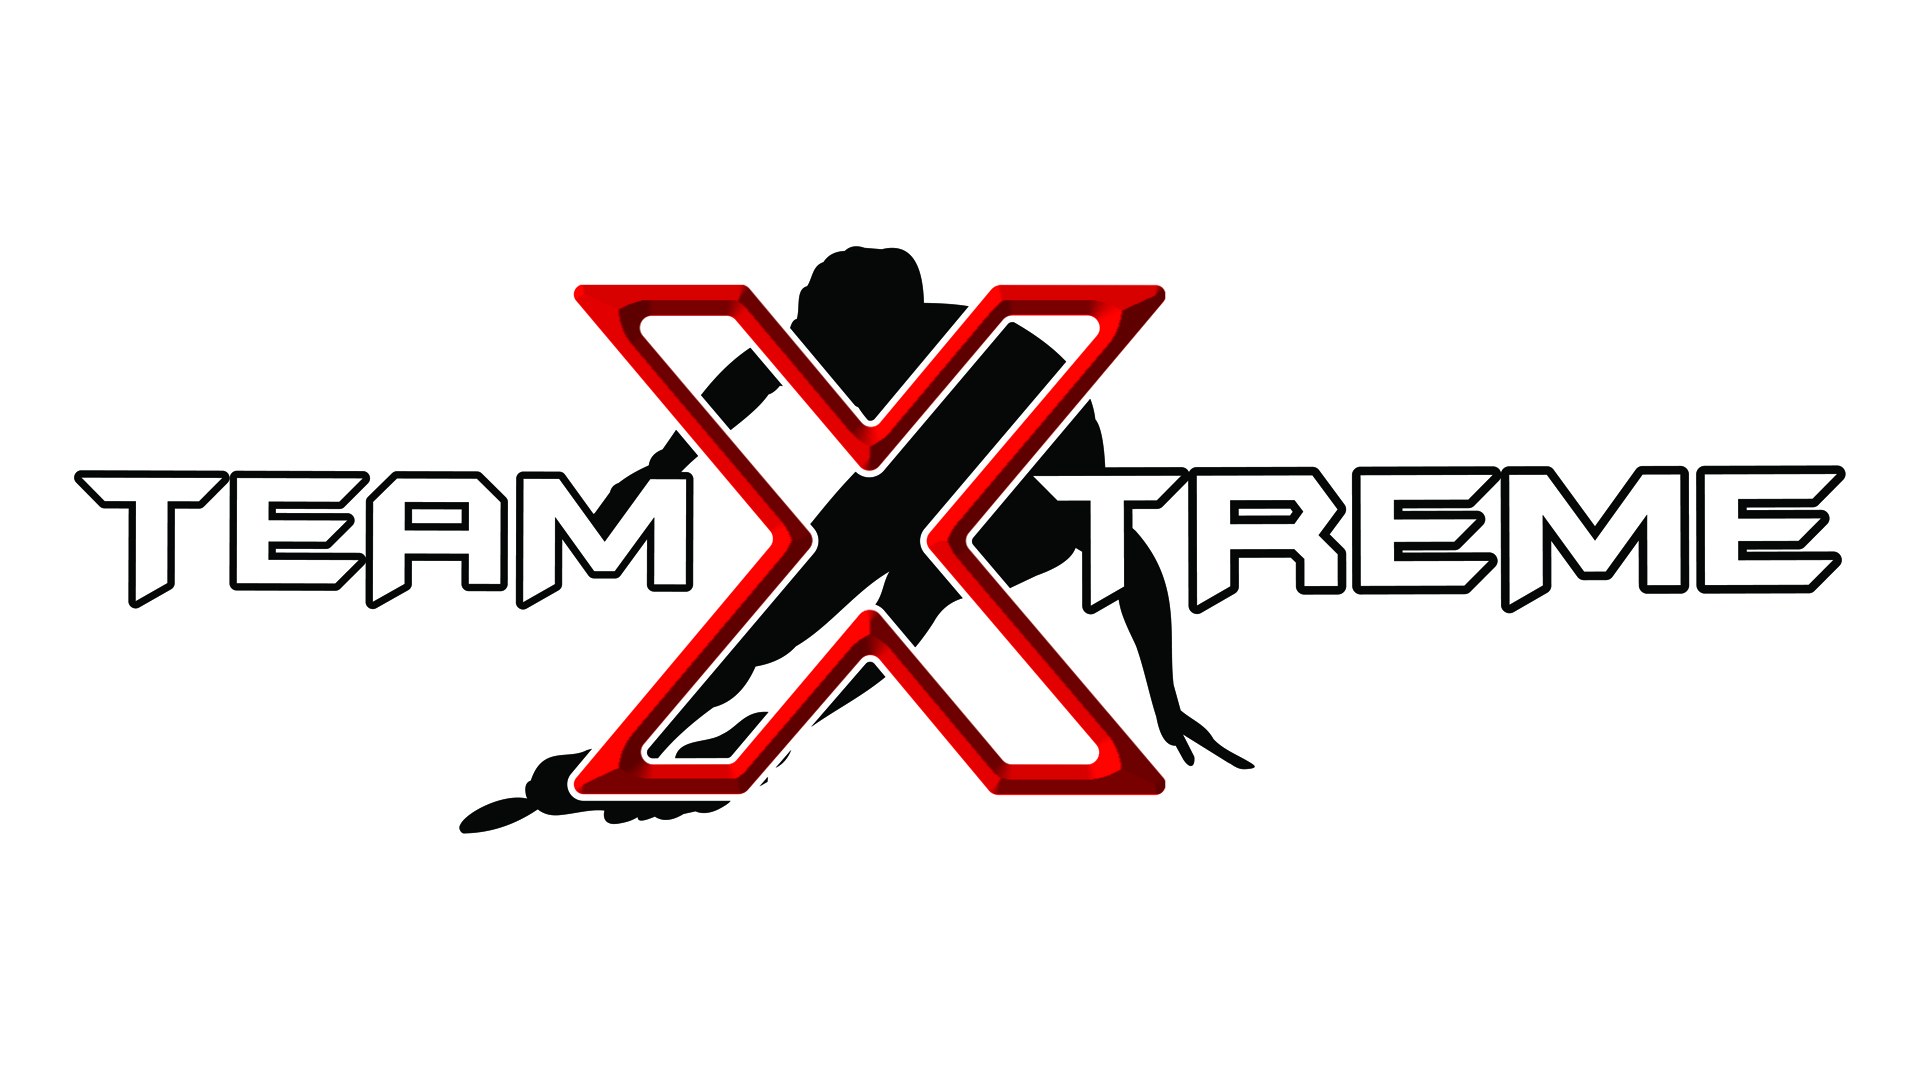 Team Xtreme